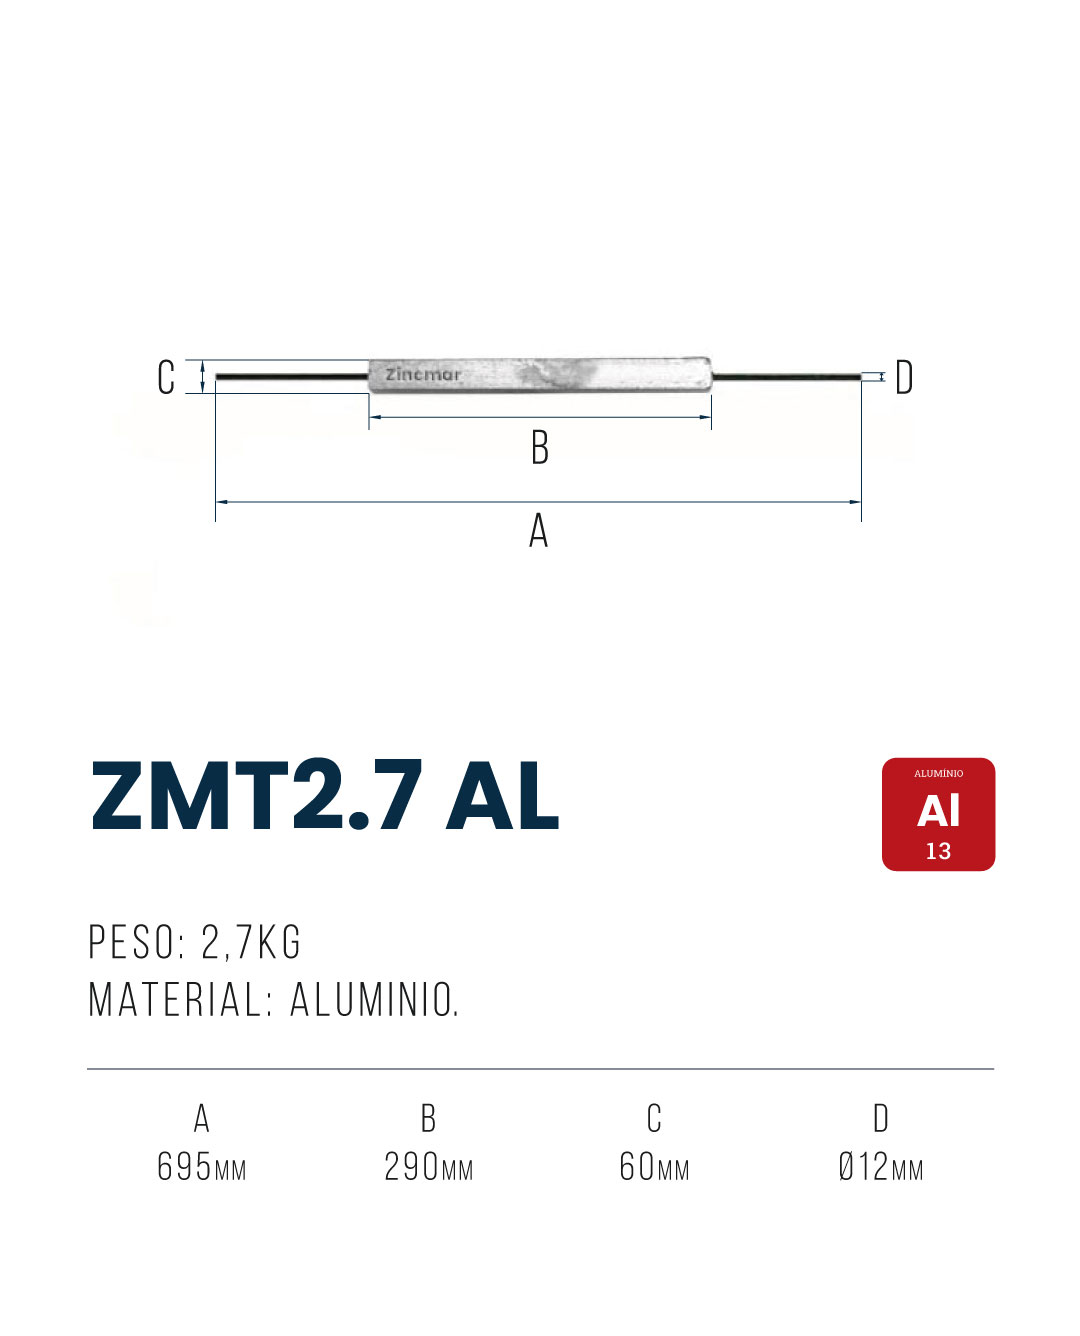 Zincmar-Catalogo-ZMT2.7AL